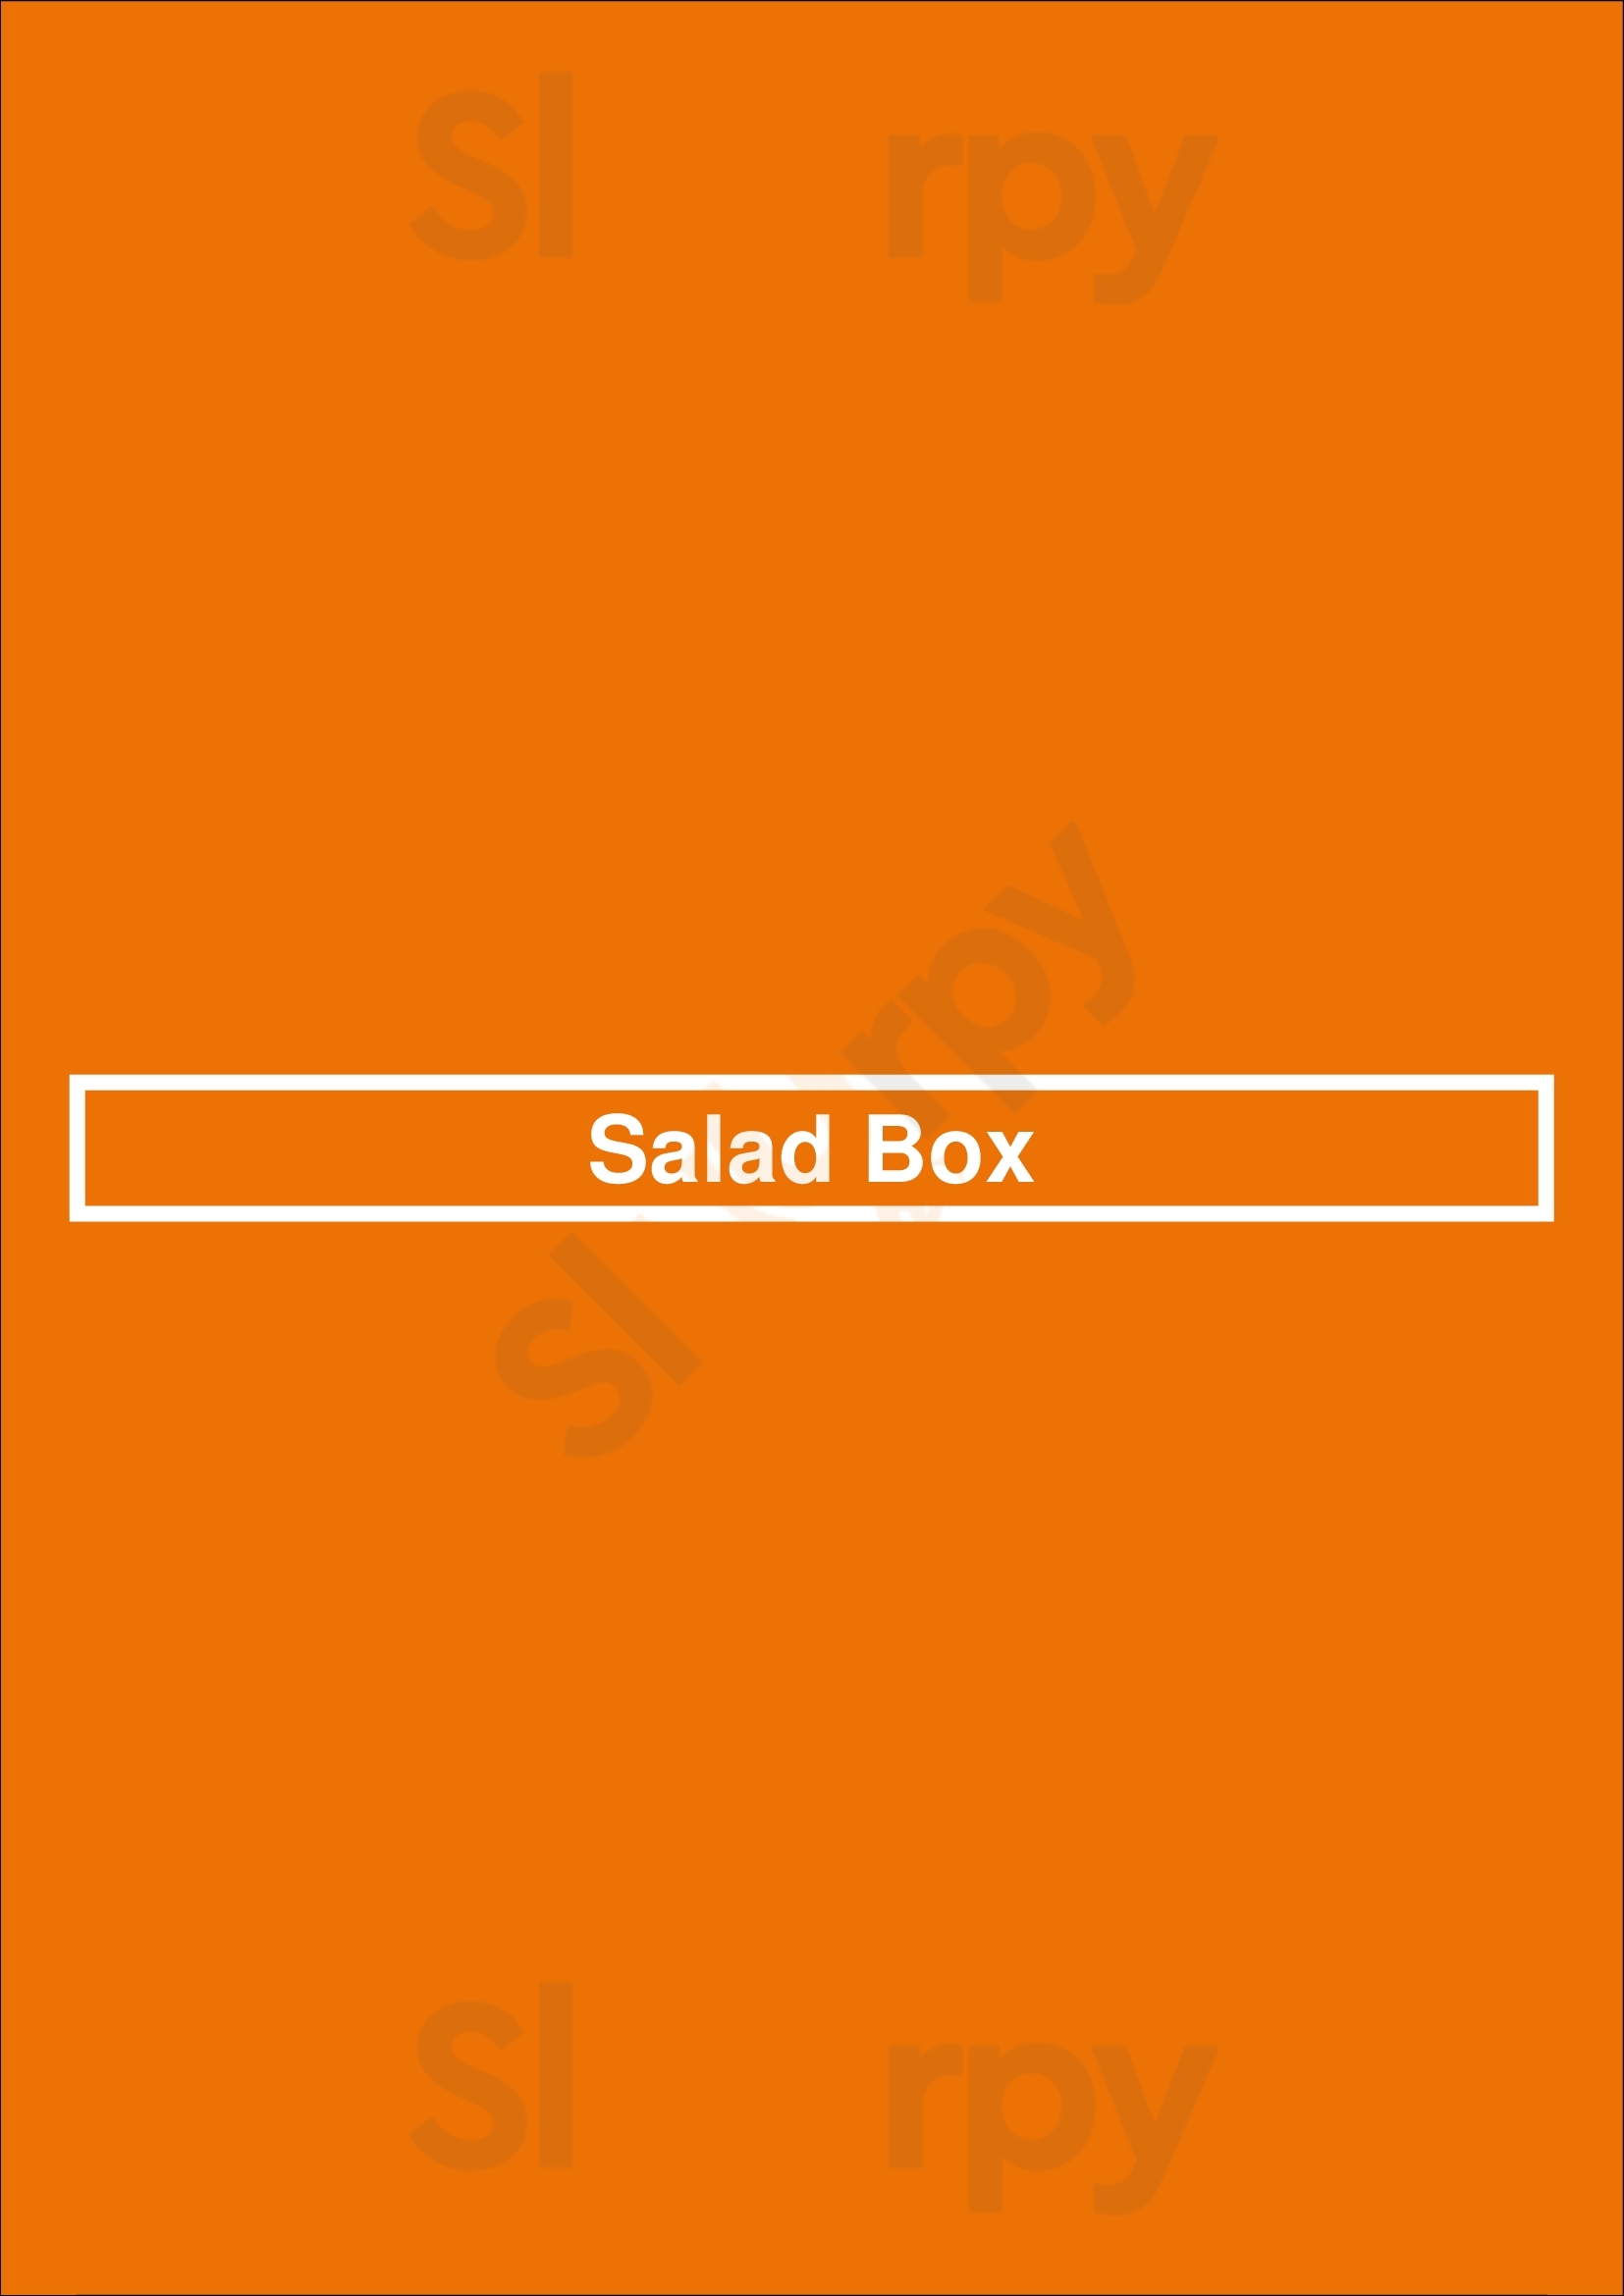 Salad Box New York City Menu - 1